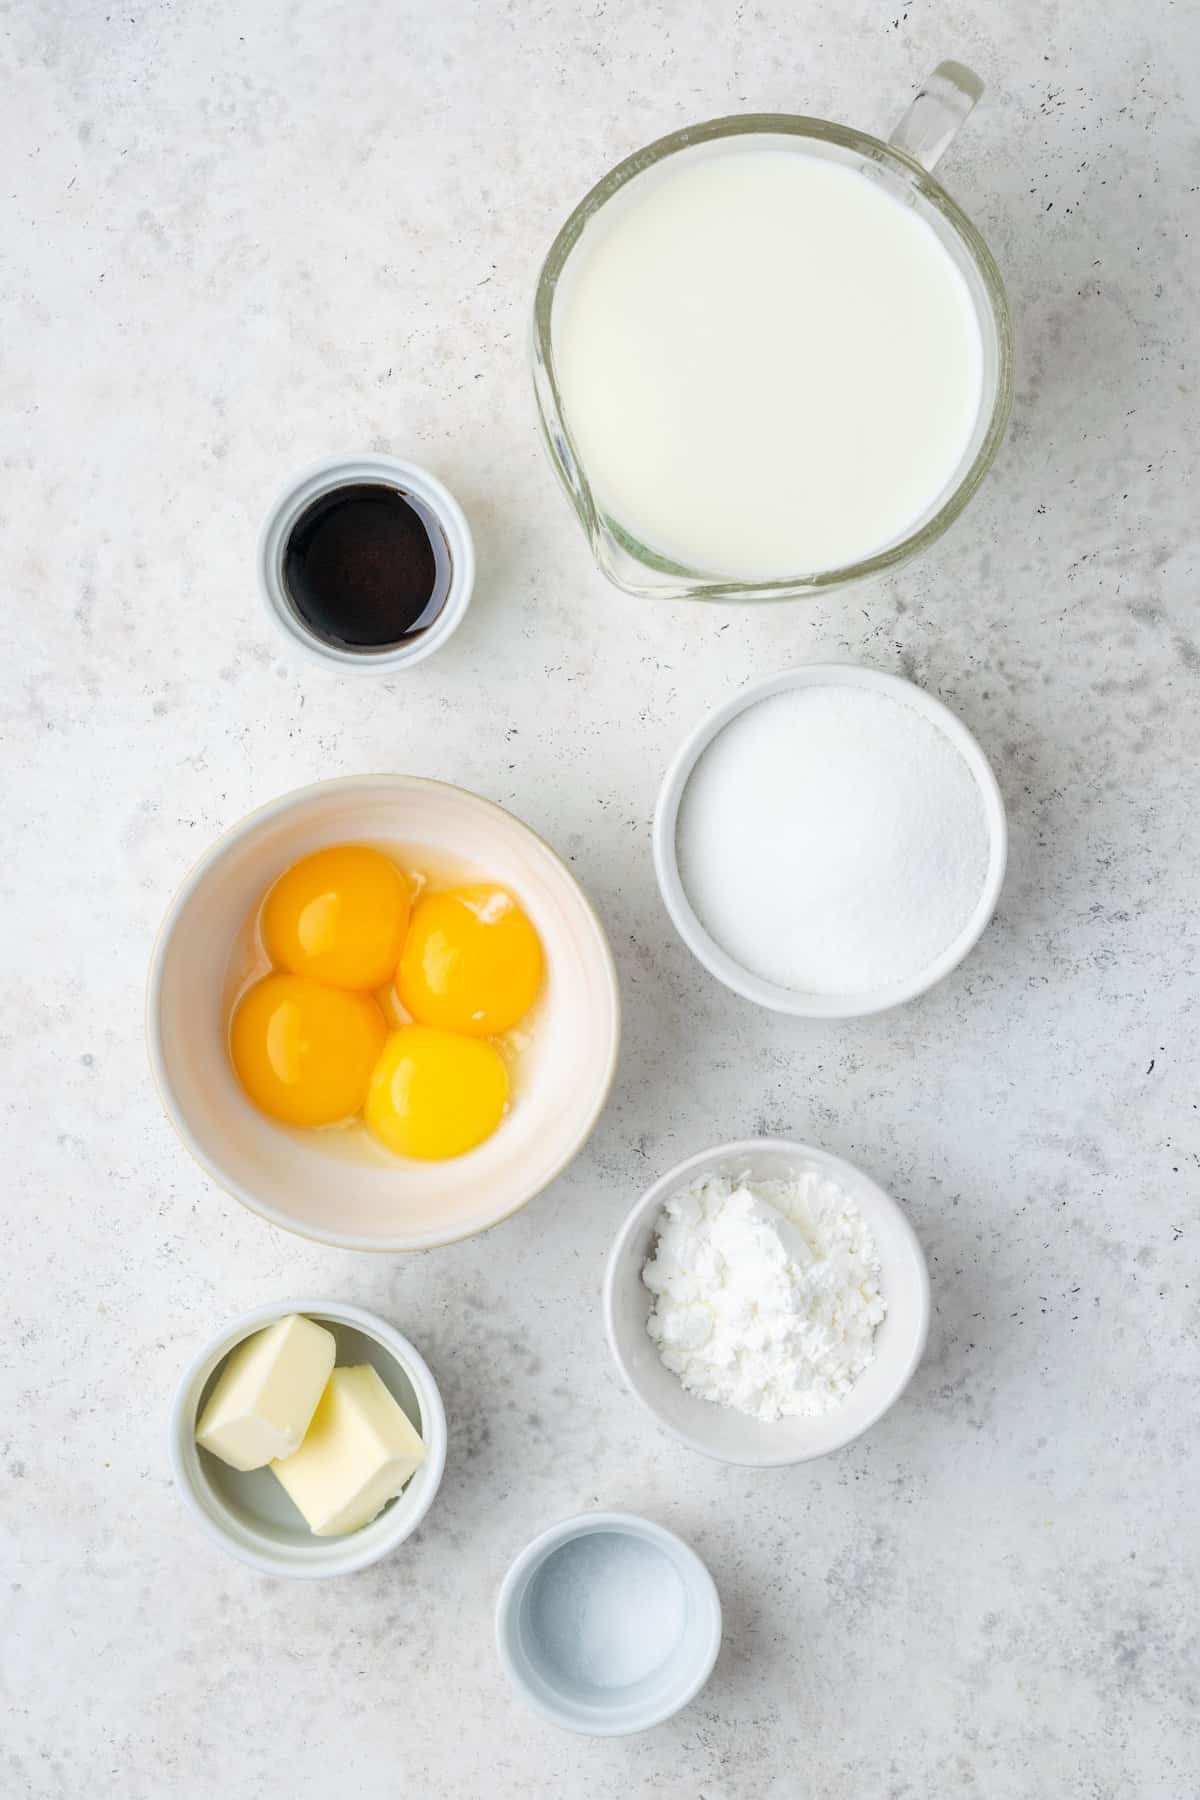 The ingredients for vanilla pastry cream.